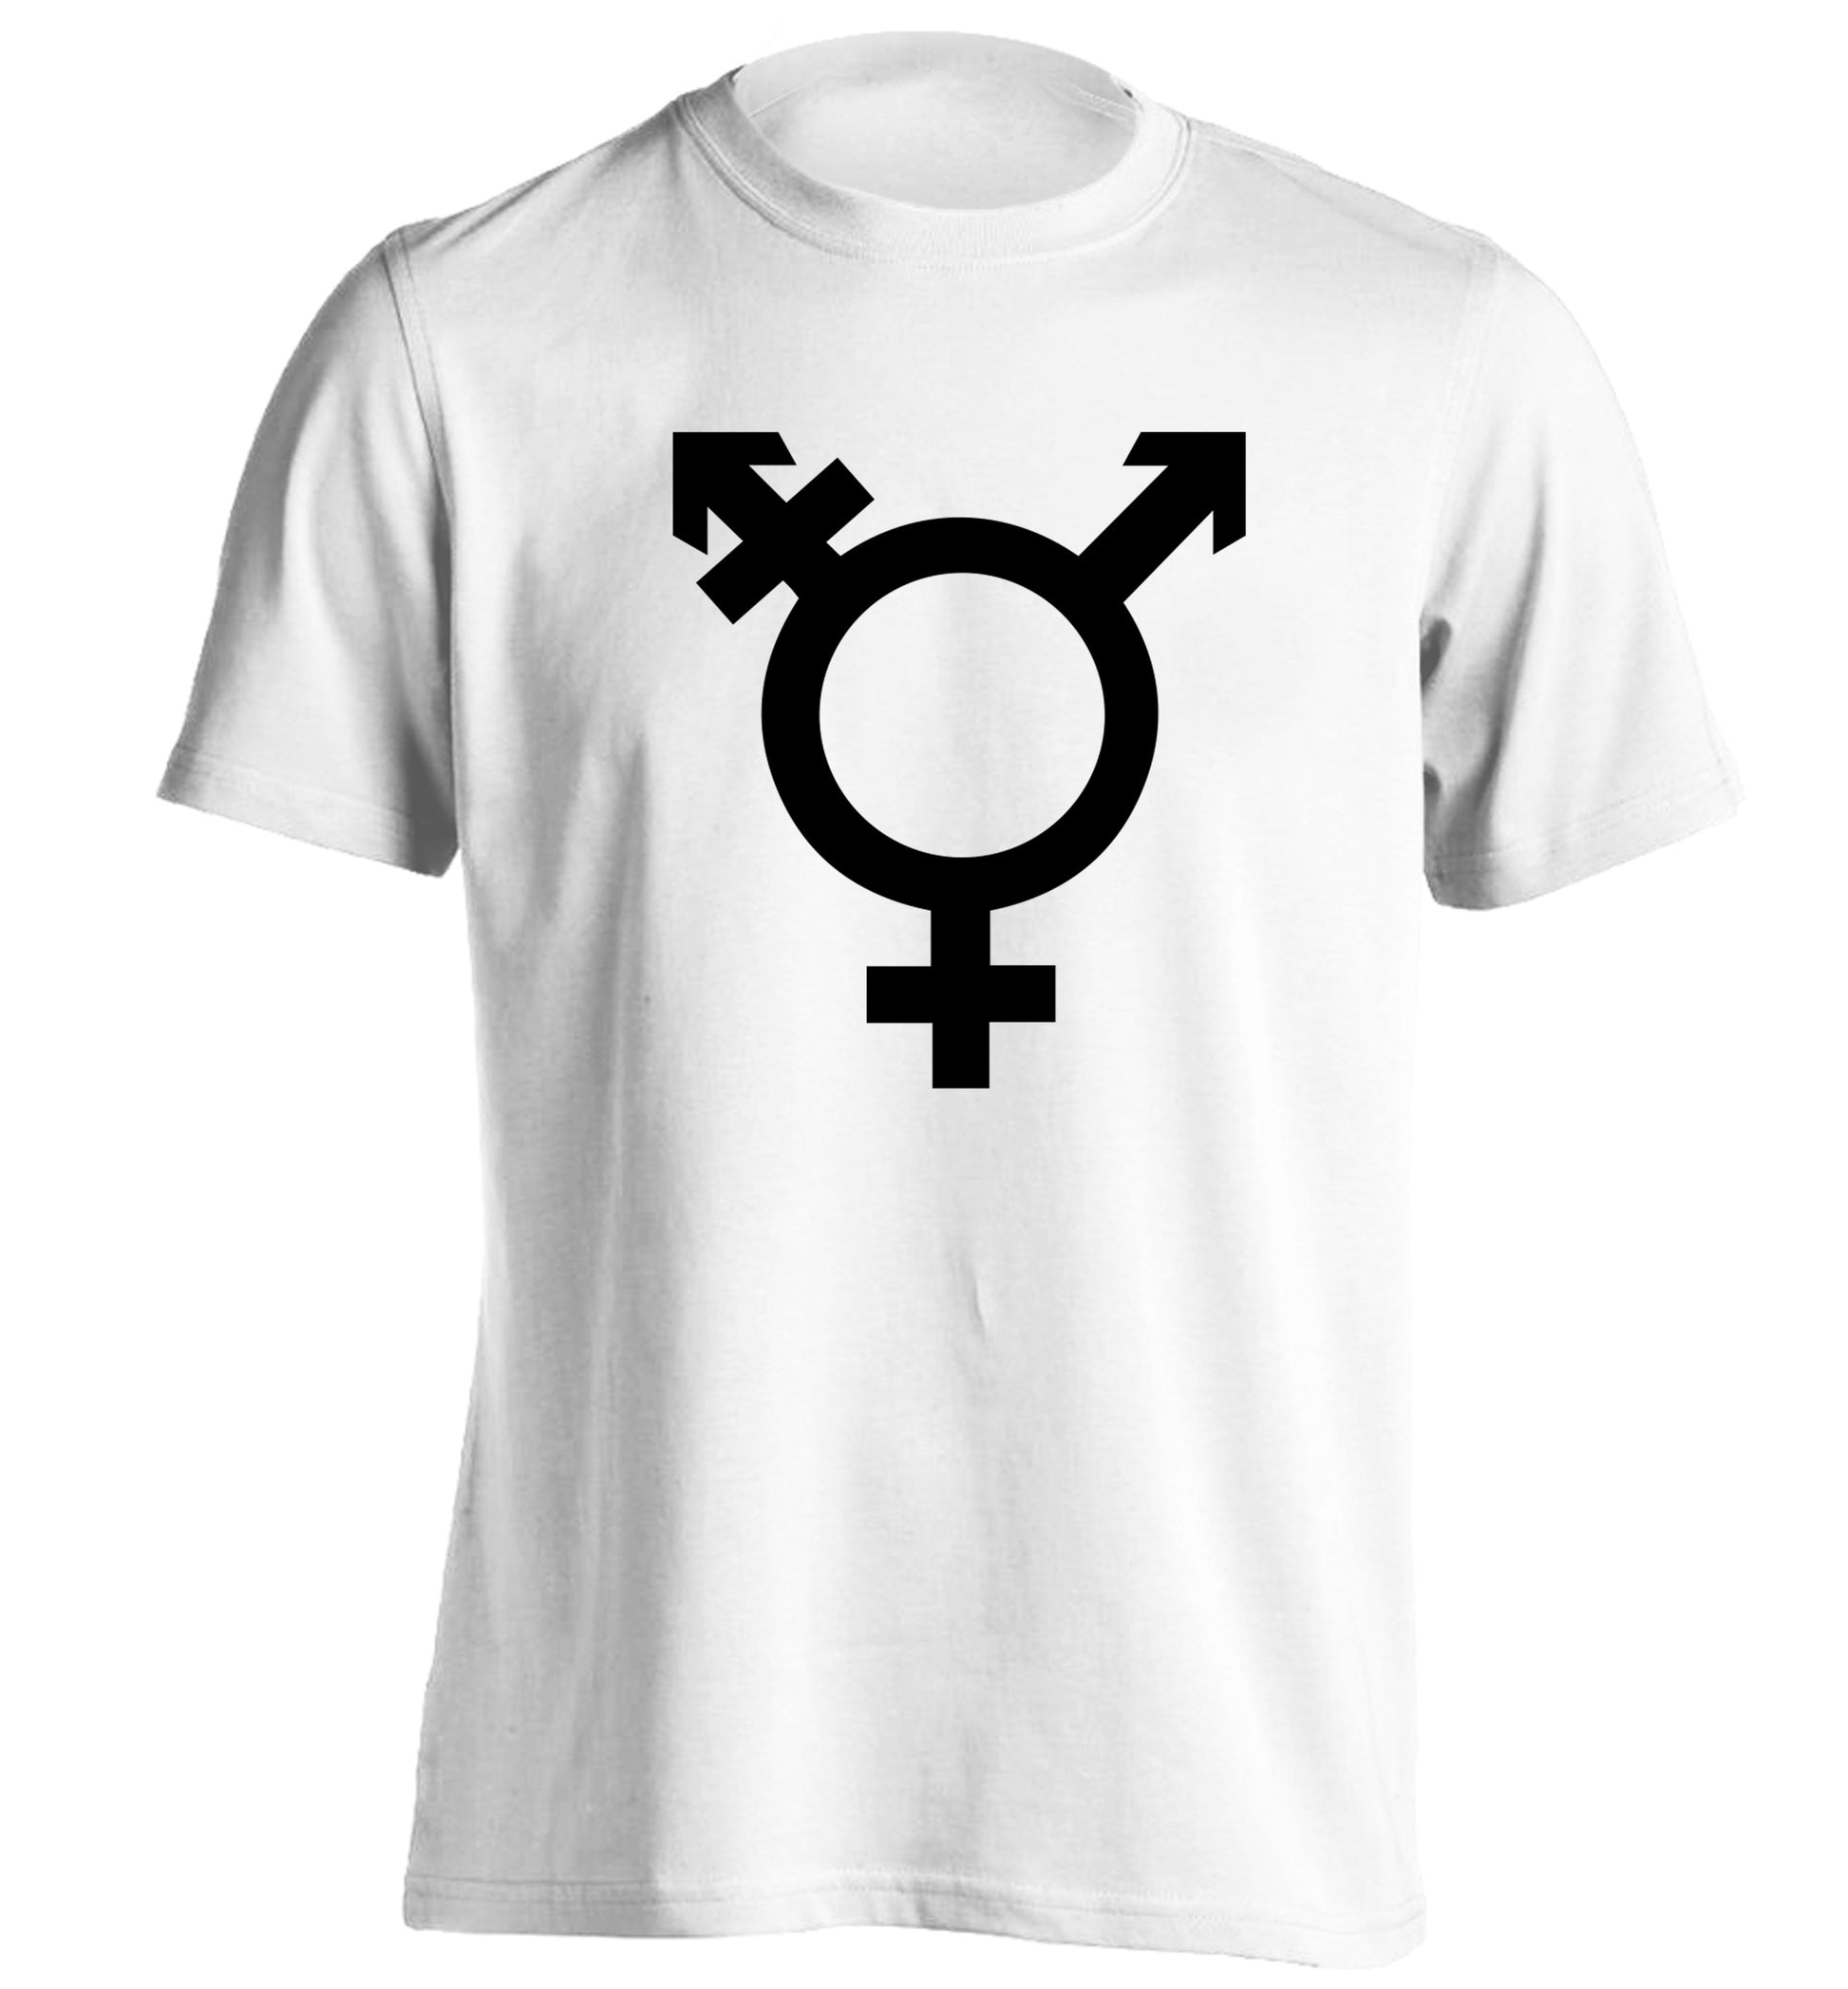 Gender neutral symbol large adults unisex white Tshirt 2XL